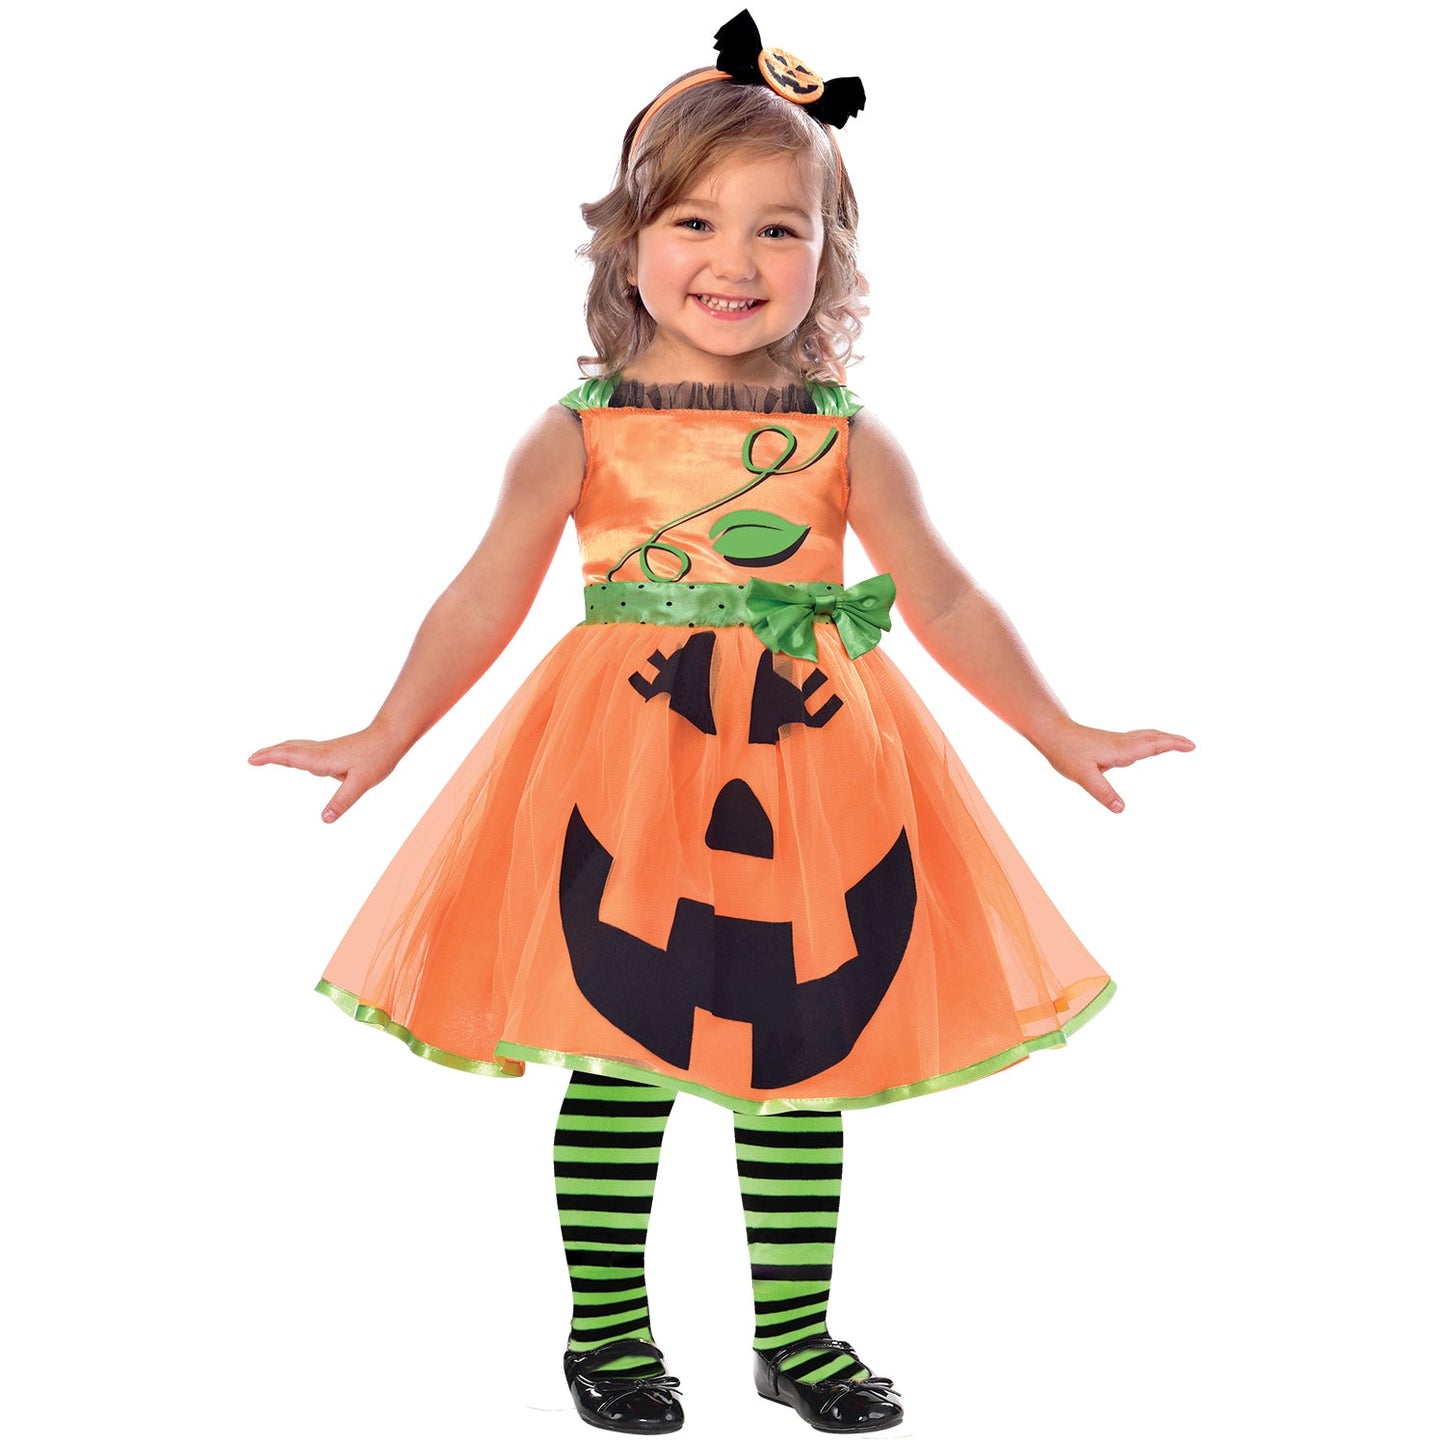 Girls Cute Pumpkin Halloween Costume includes dress and headband